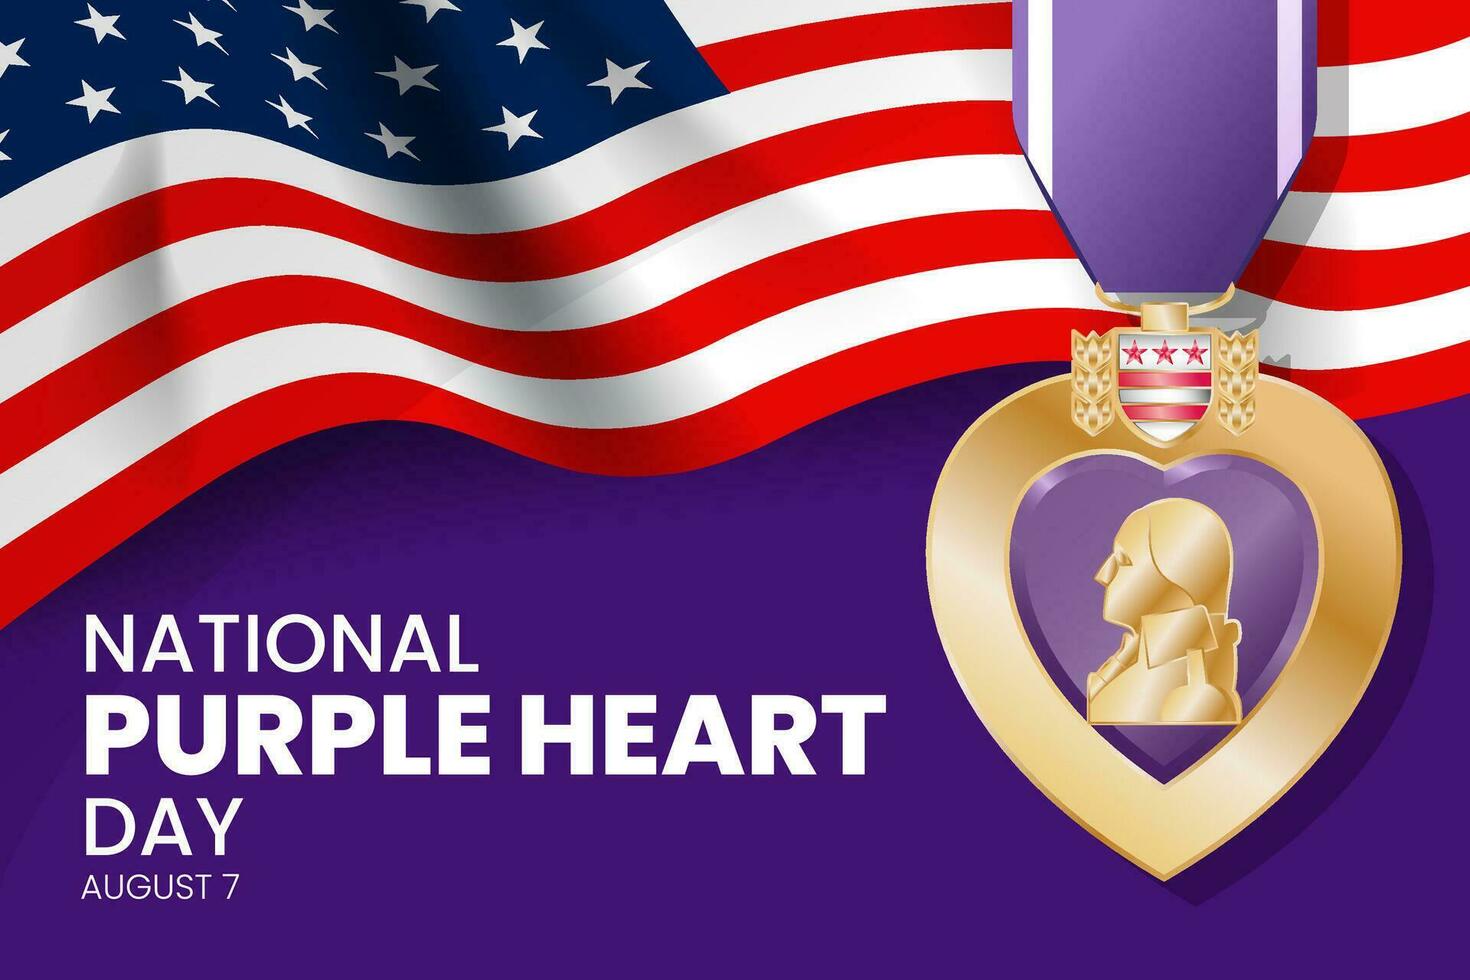 Purper hart dag medaille met ons vlag achtergrond, nationaal Purper hart dag - augustus 7e vector